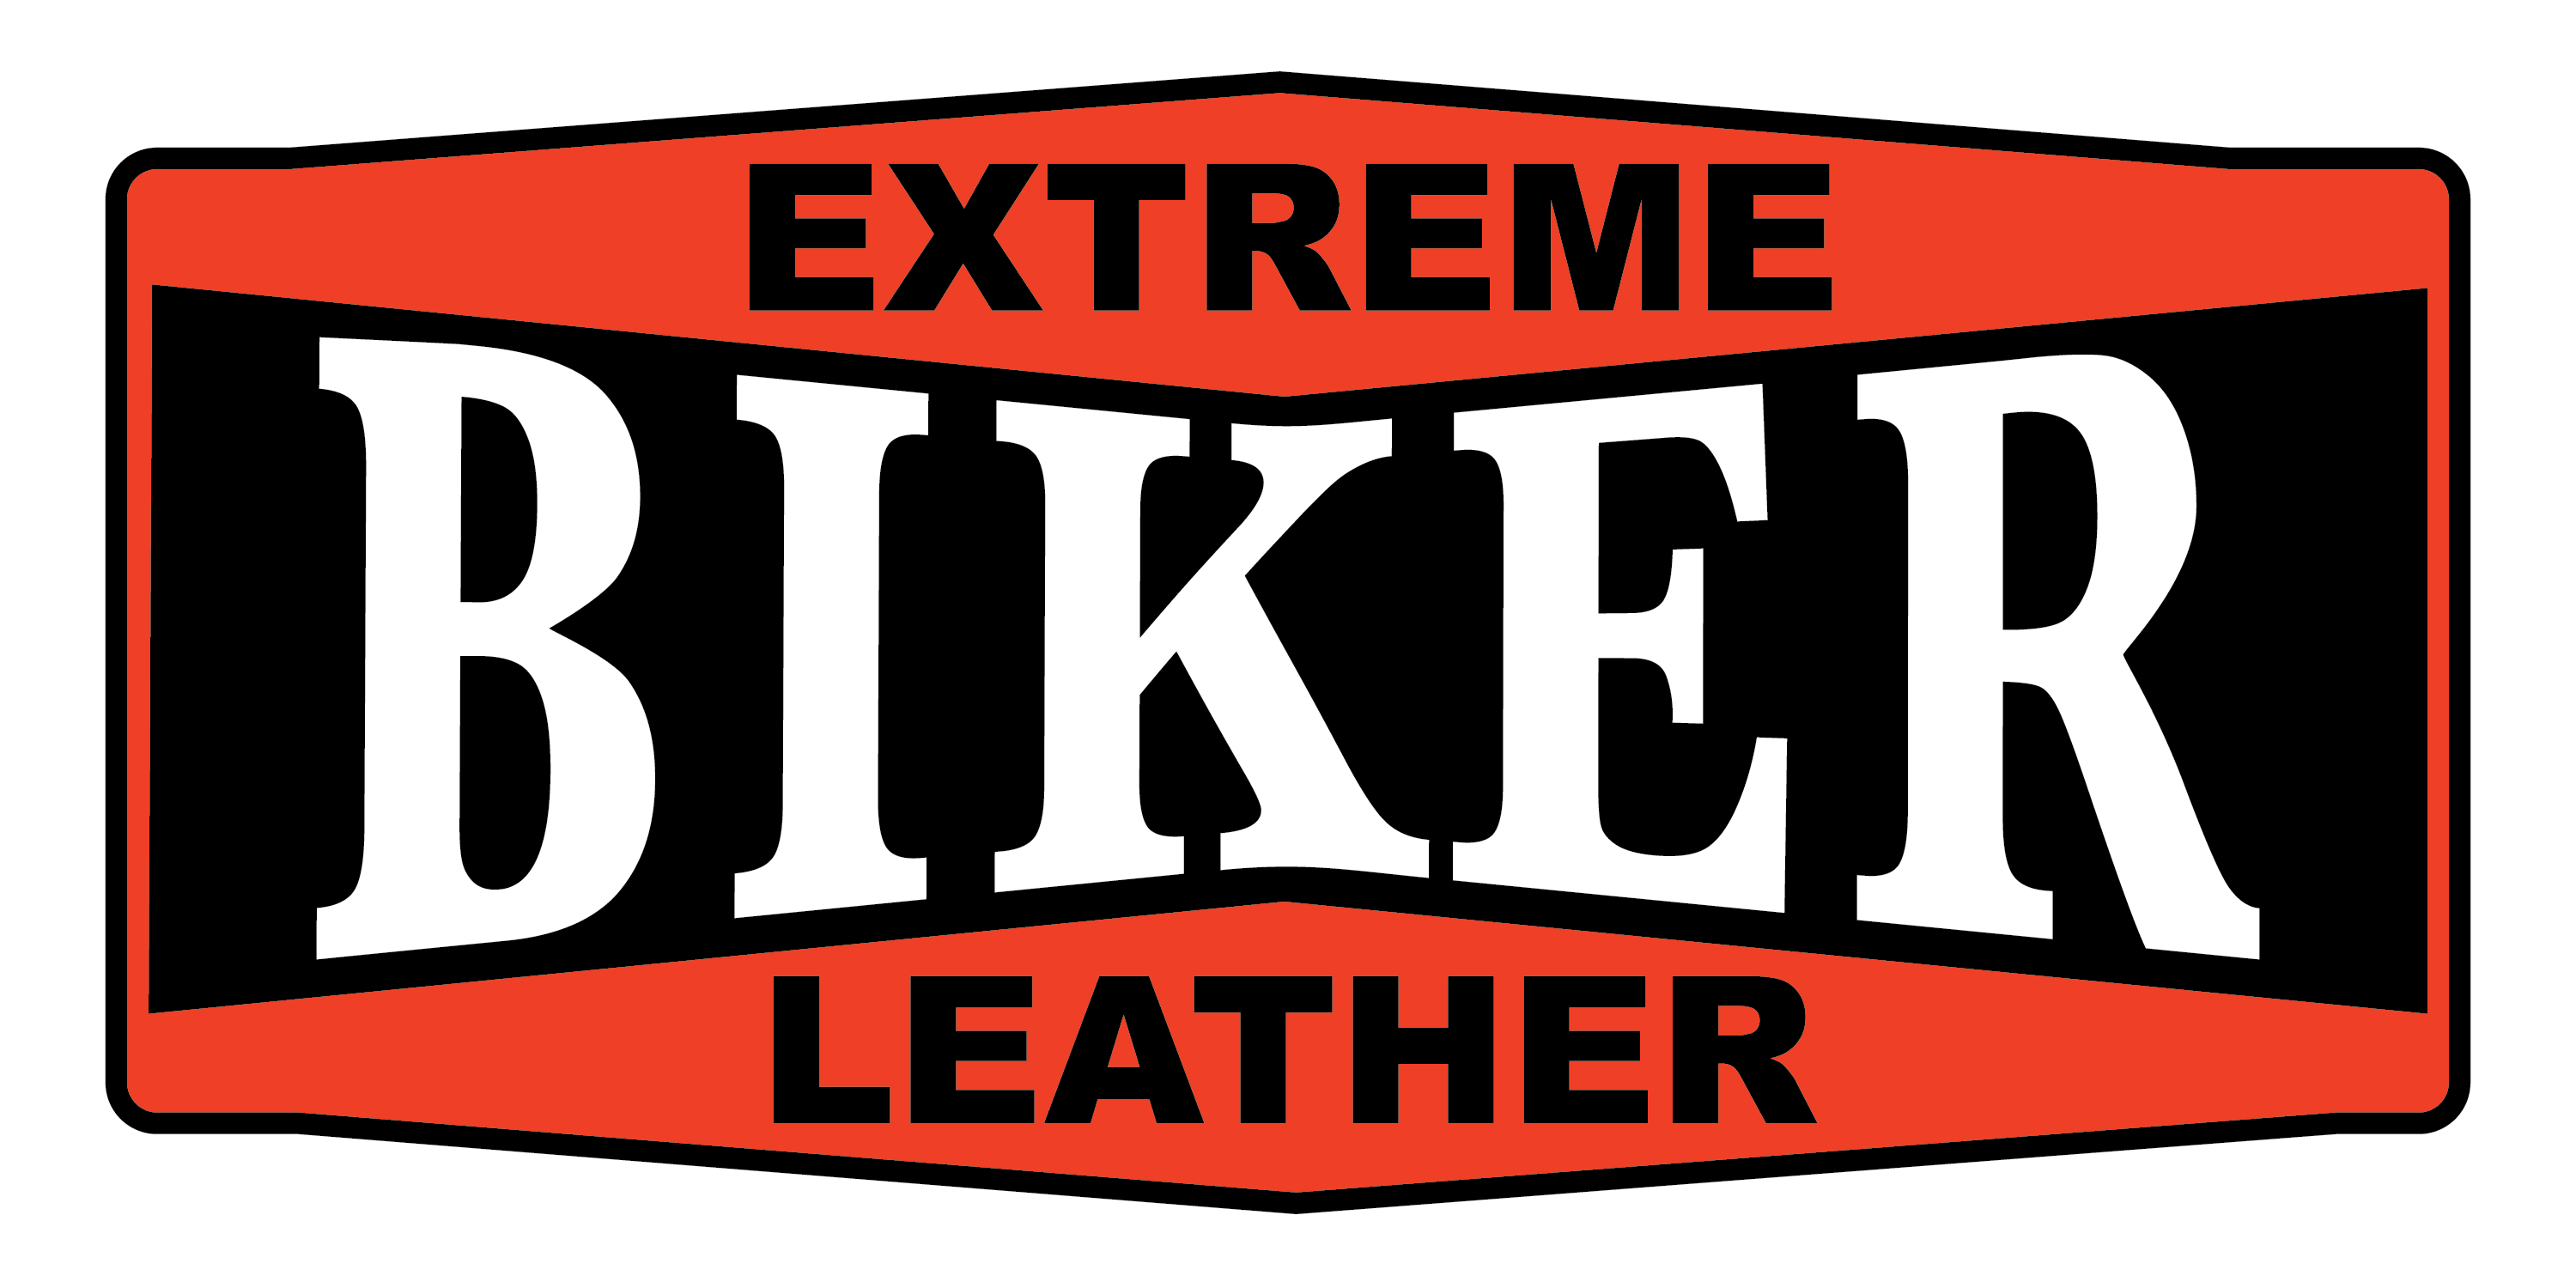 Extreme Biker Leather